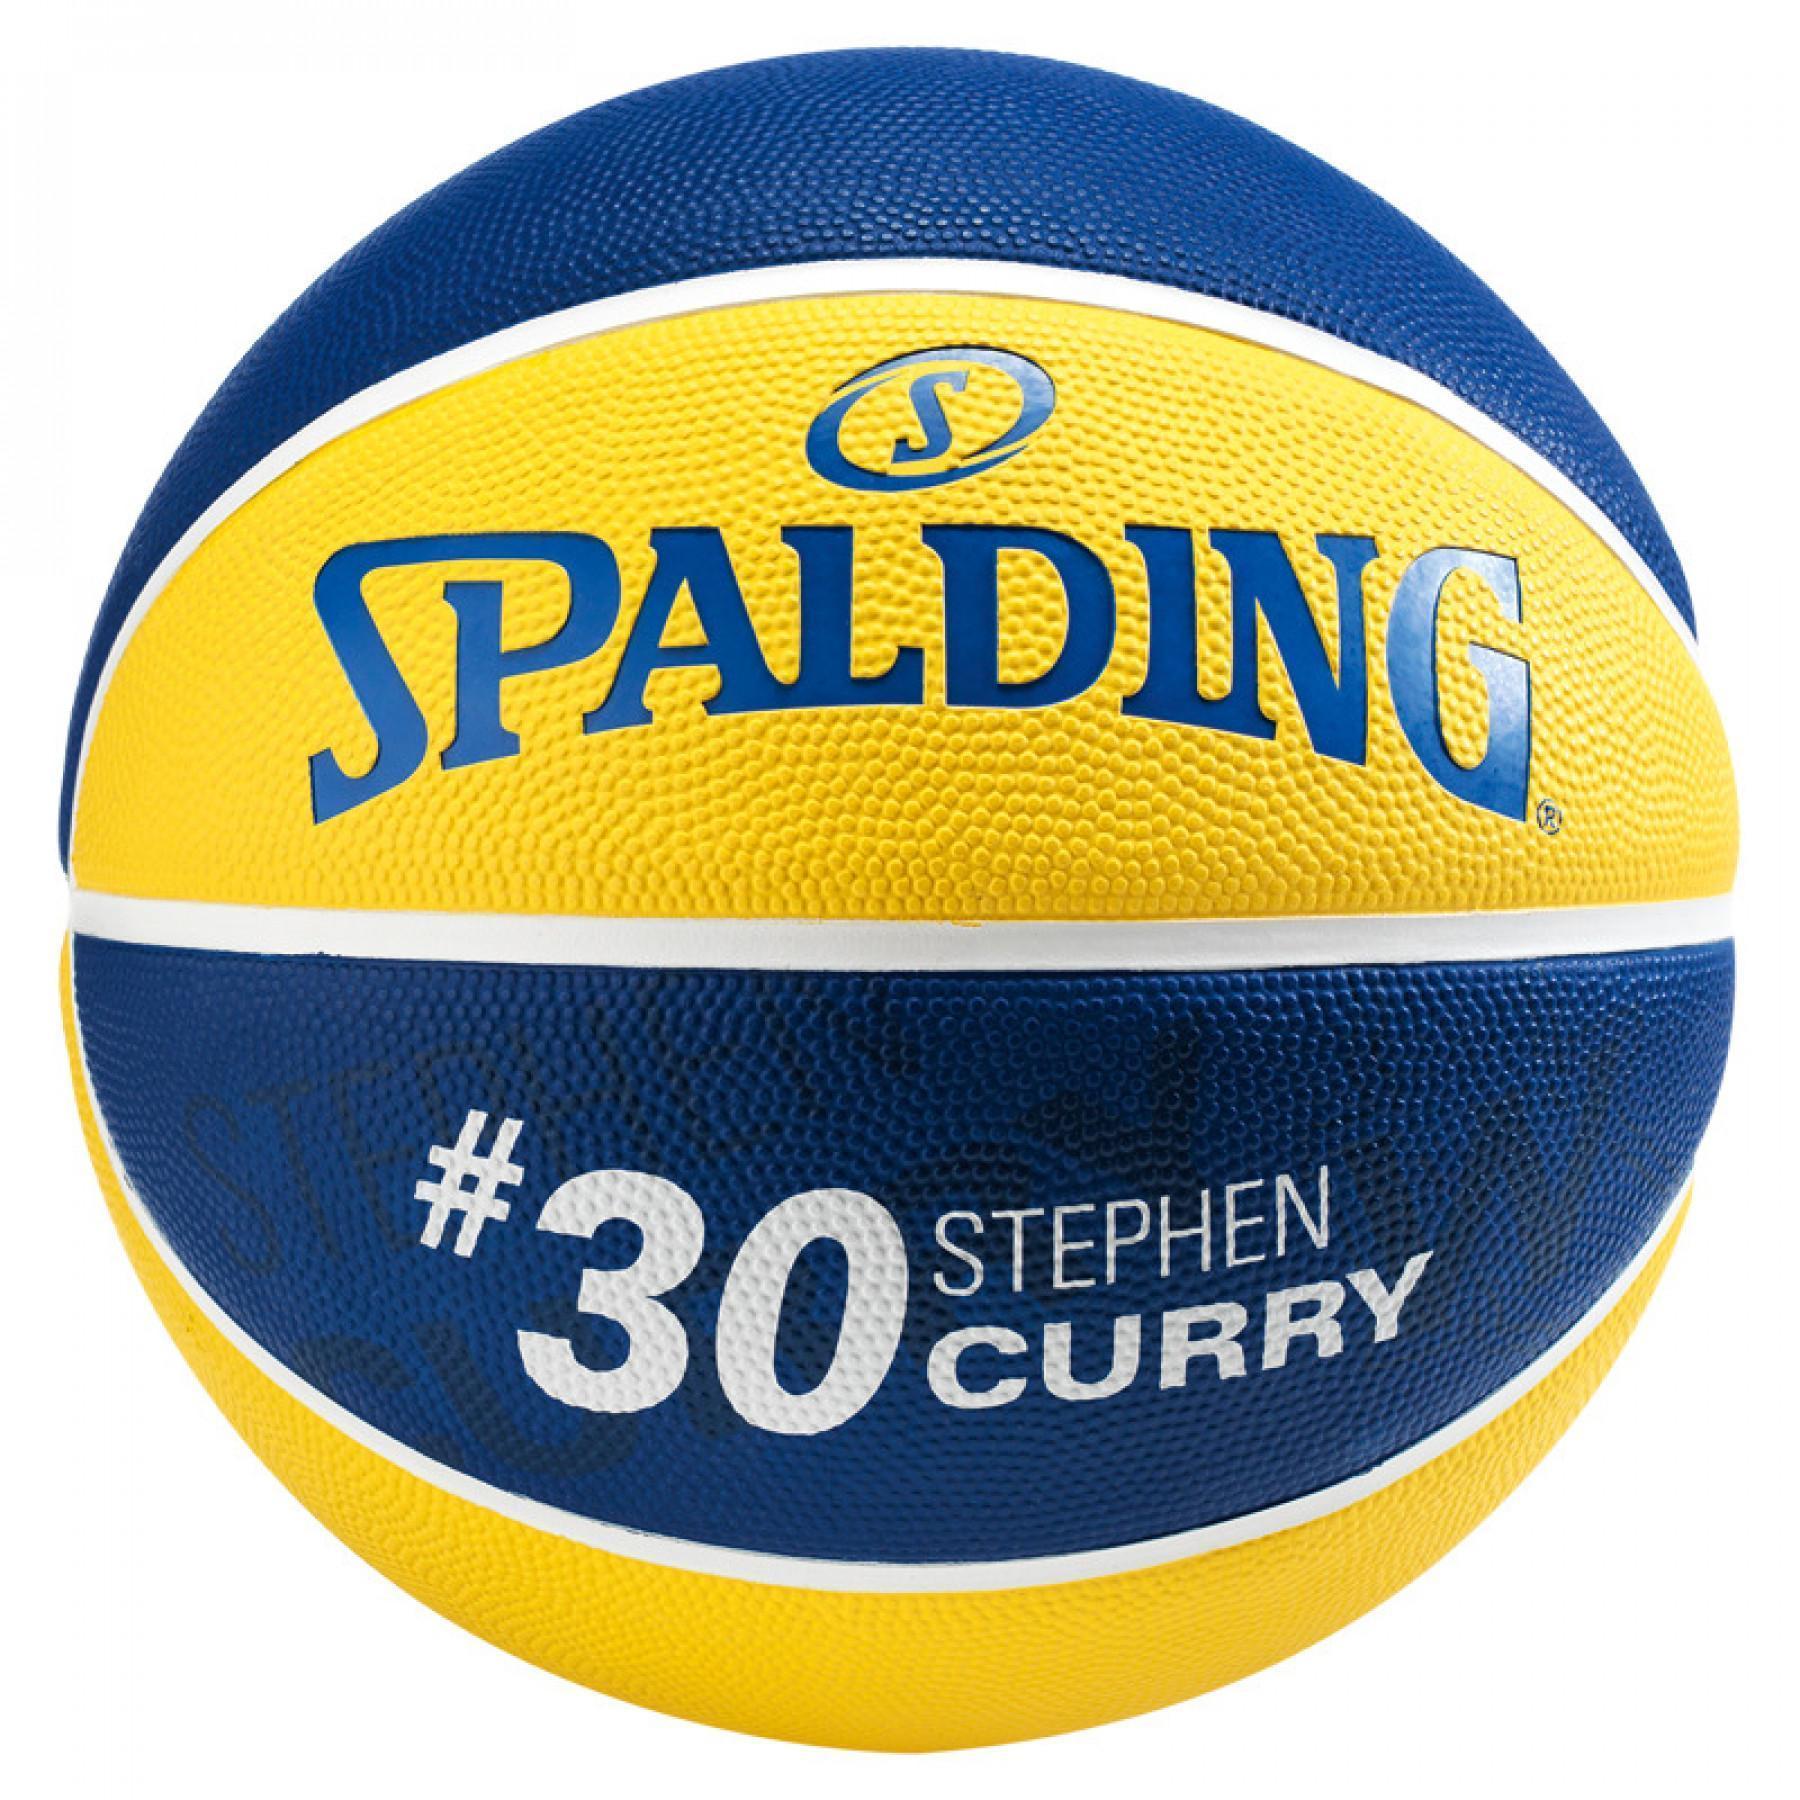 Balloon Spalding NBA Player Stephen Curry (83-844z)